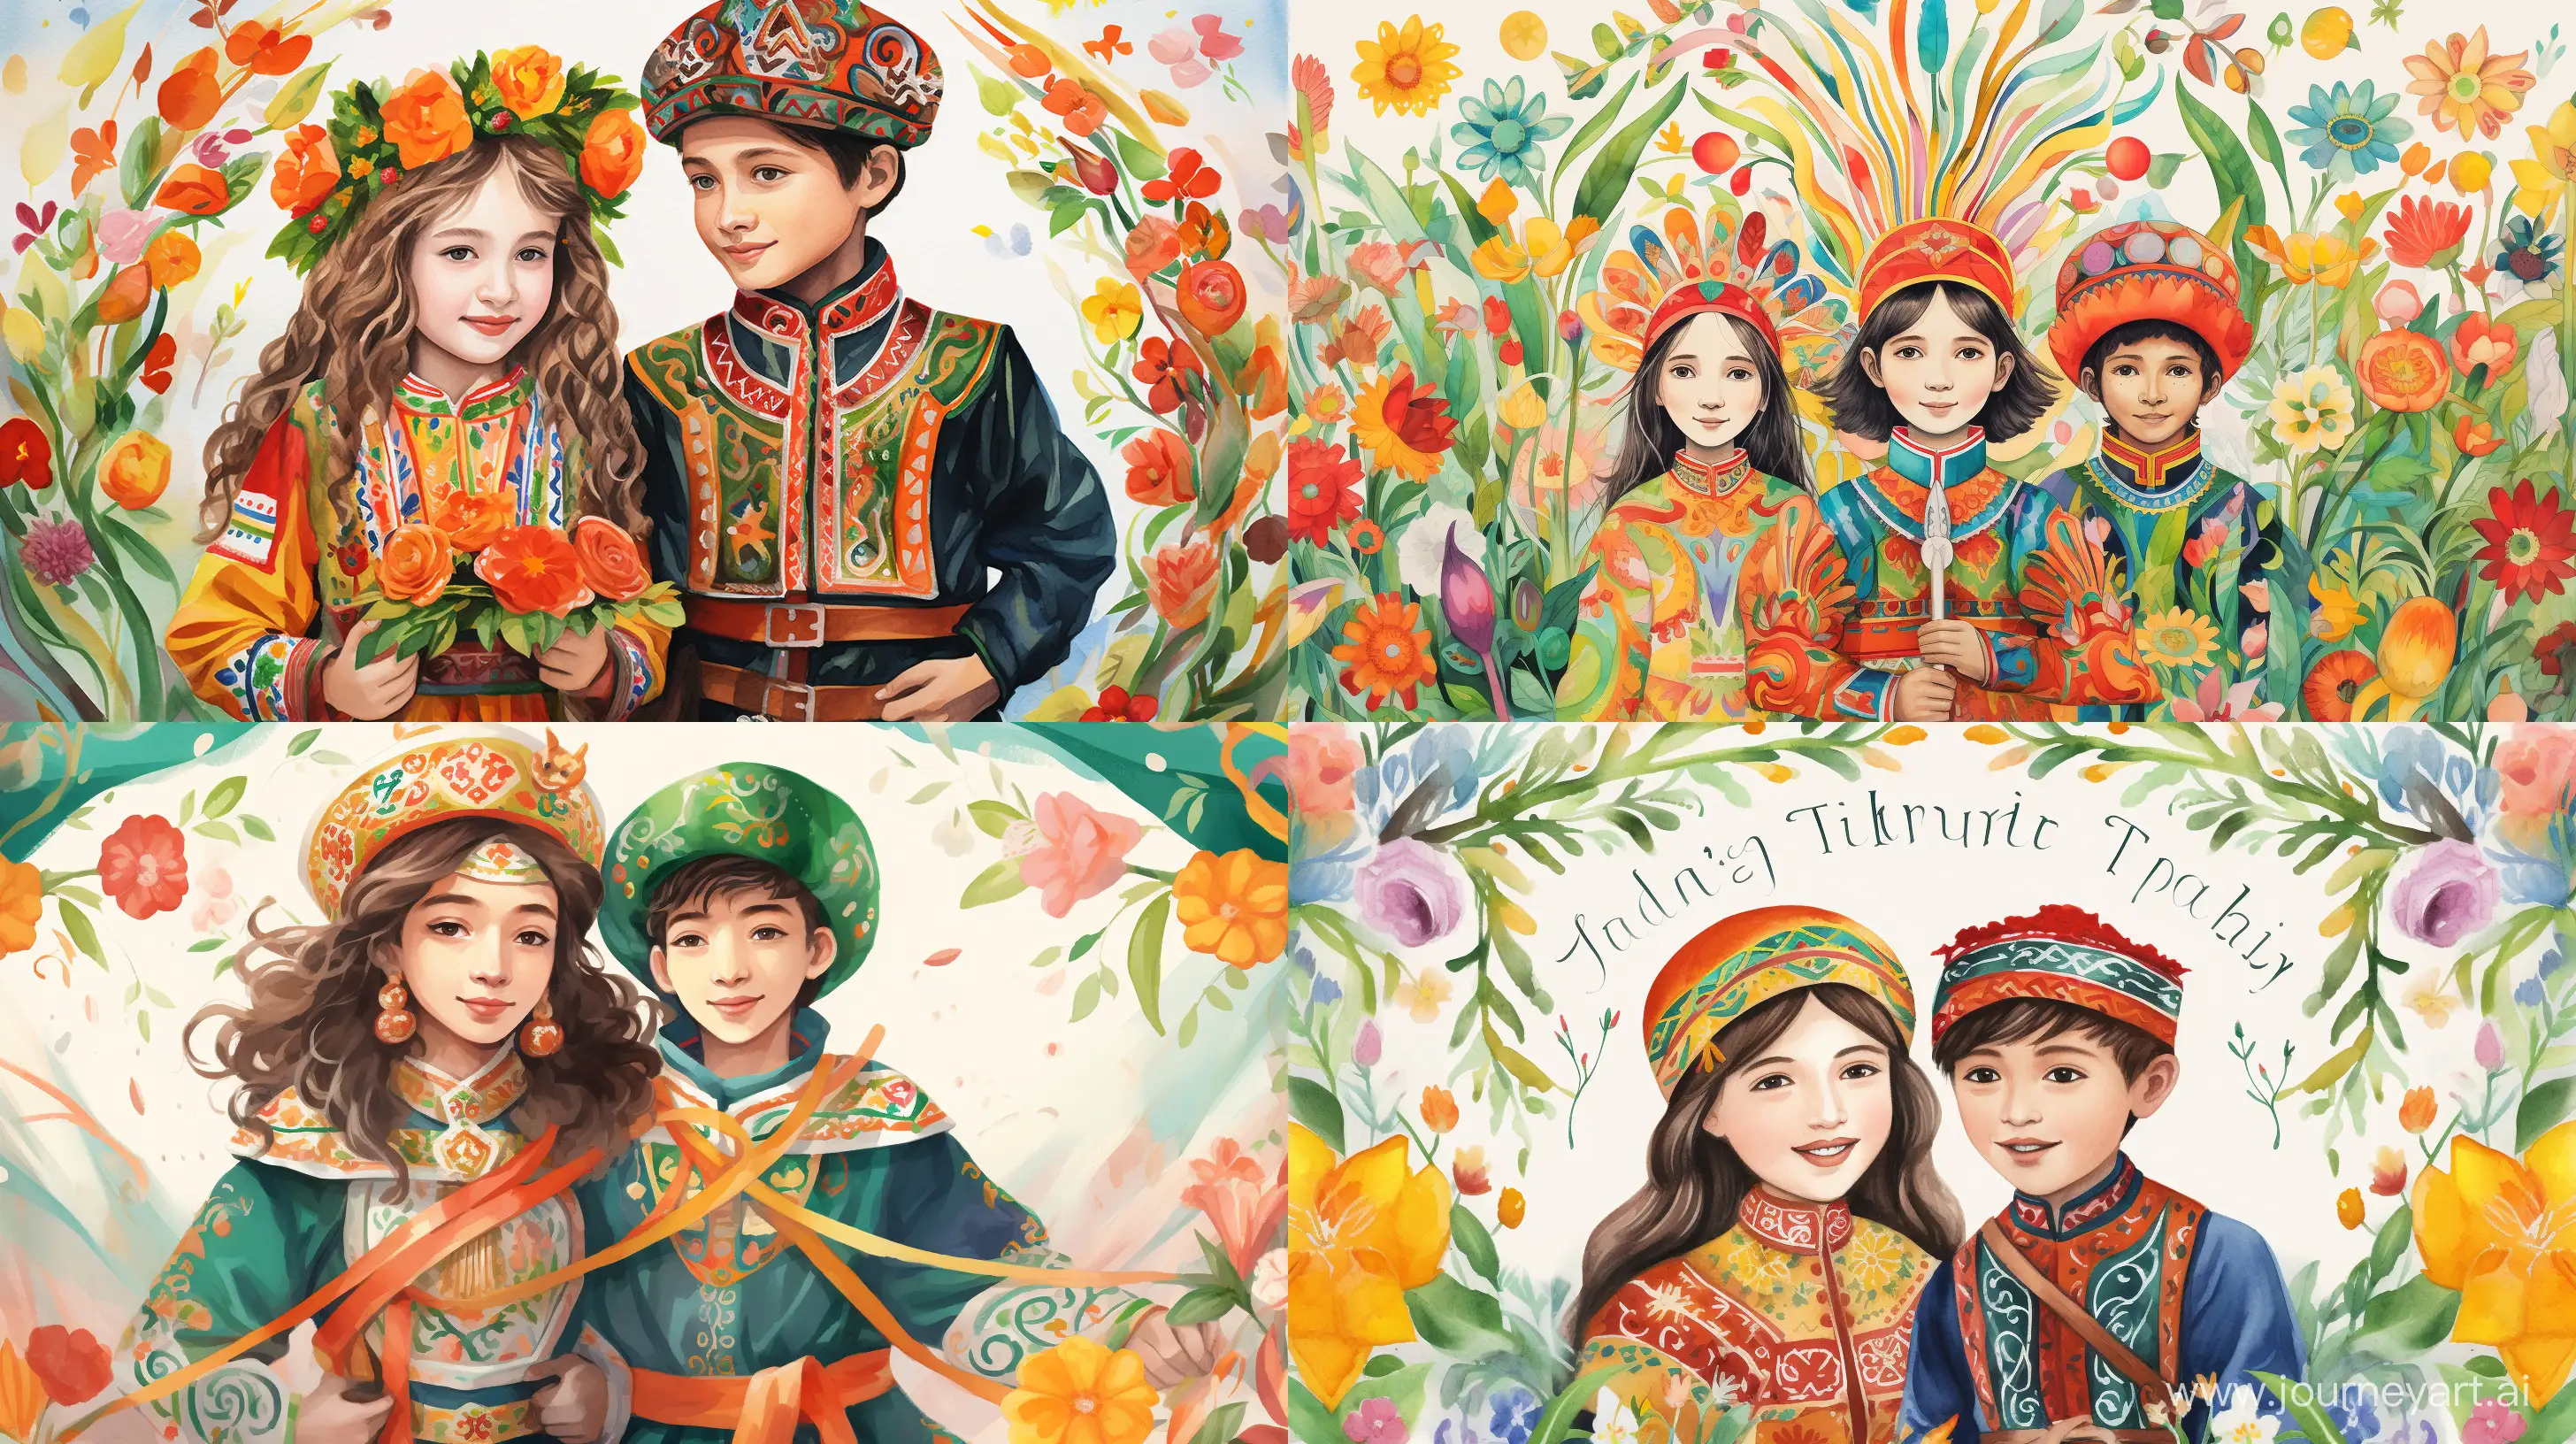 Joyful-Amazigh-New-Year-Celebration-with-Children-in-Traditional-Clothing